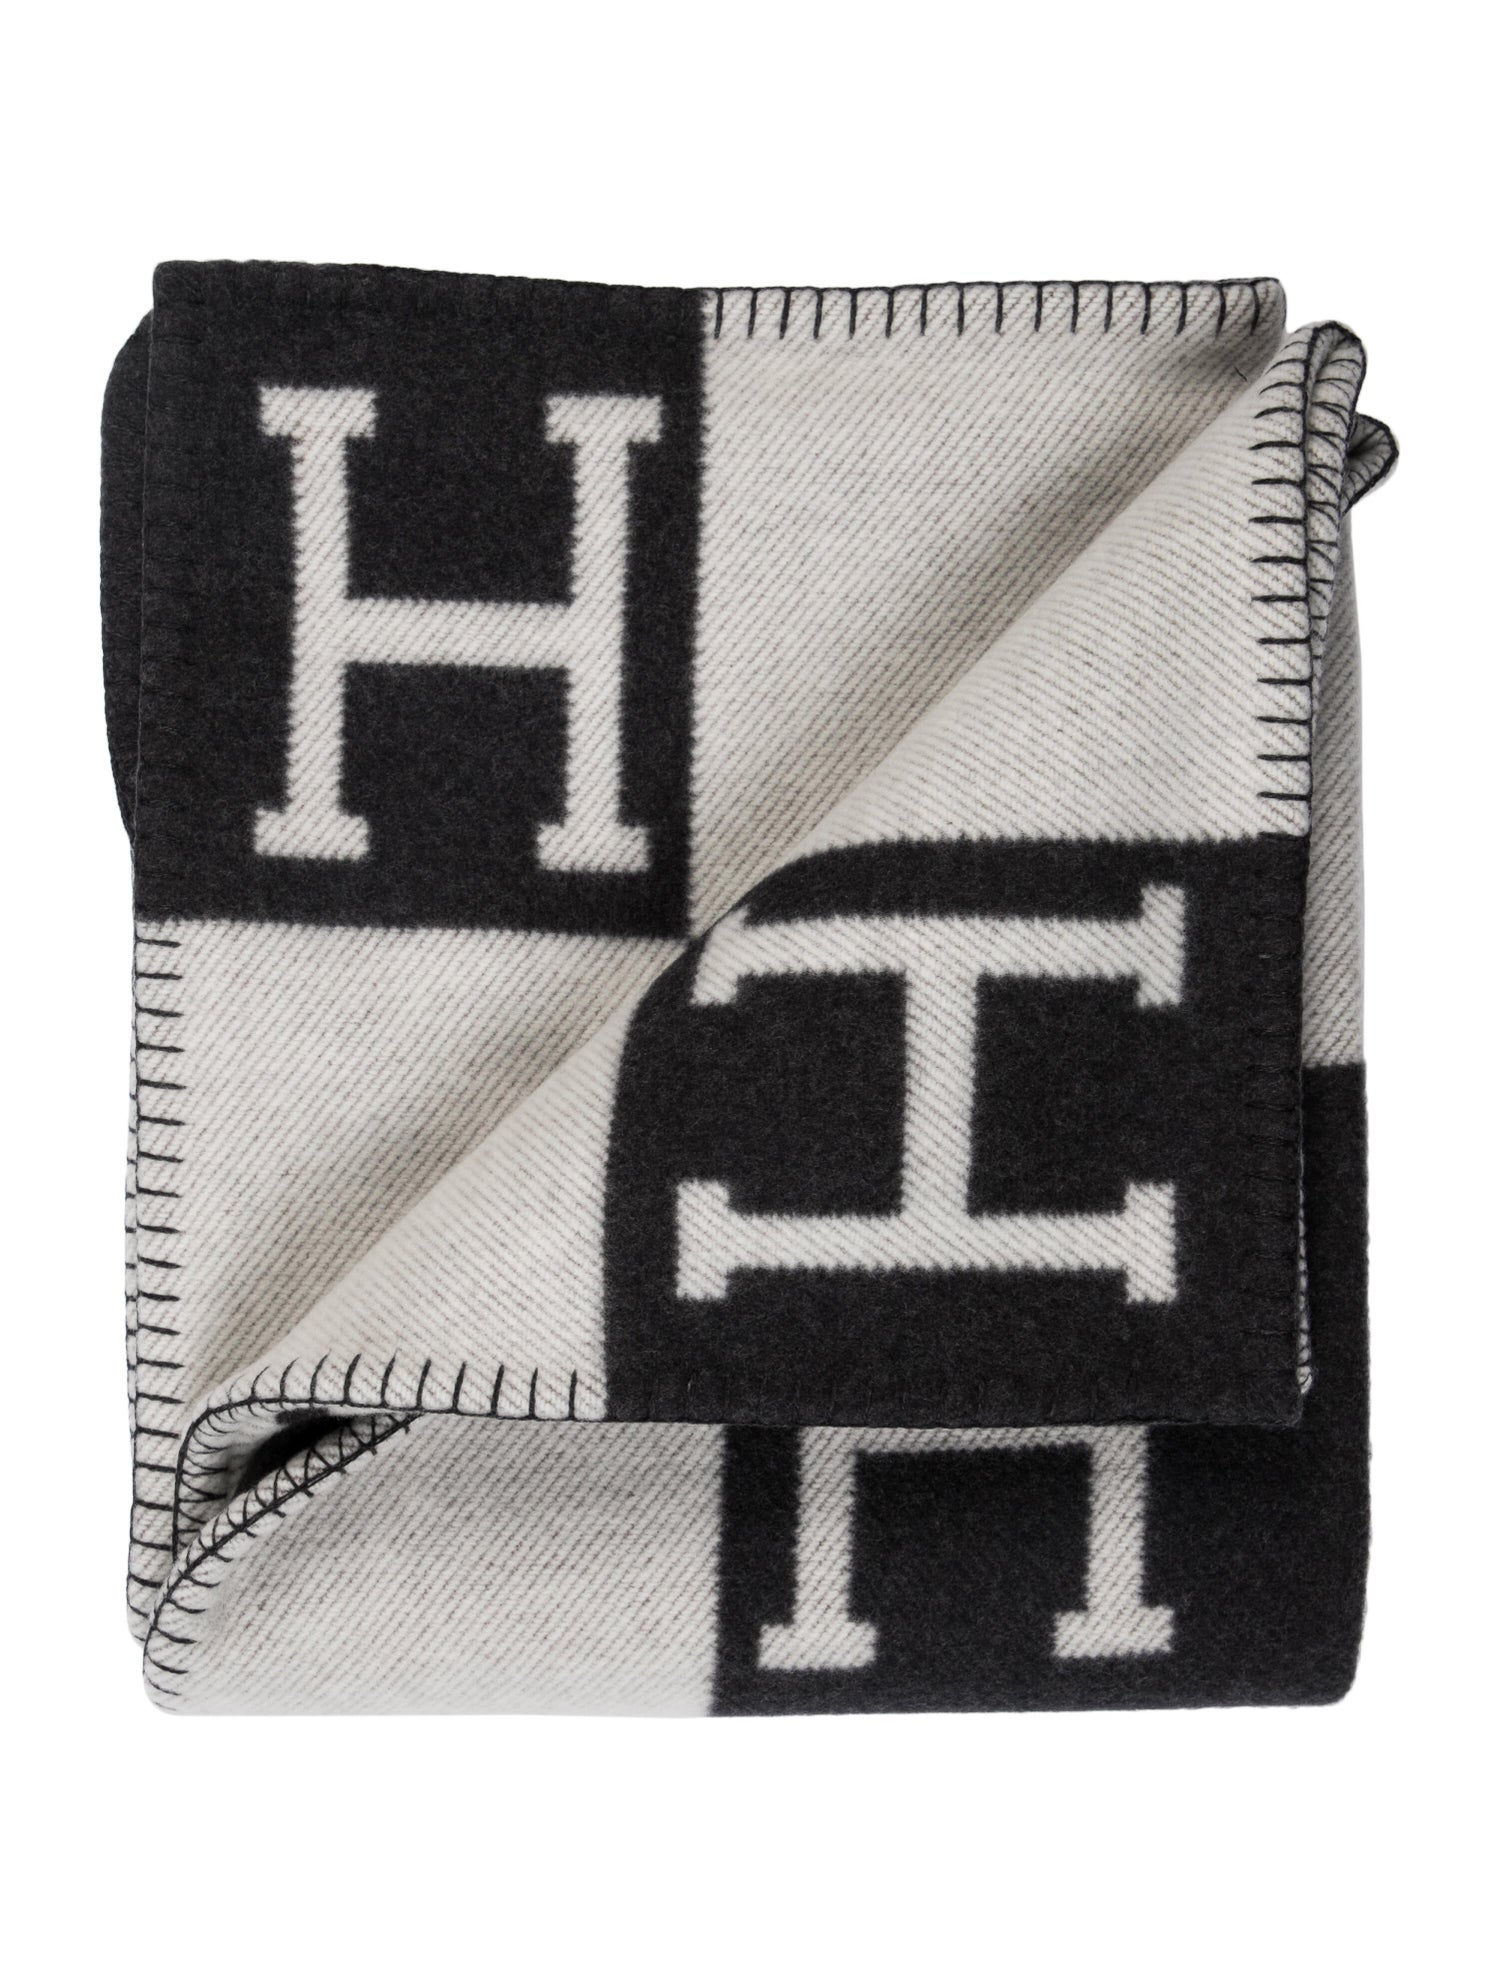 Hermes blanket, black 